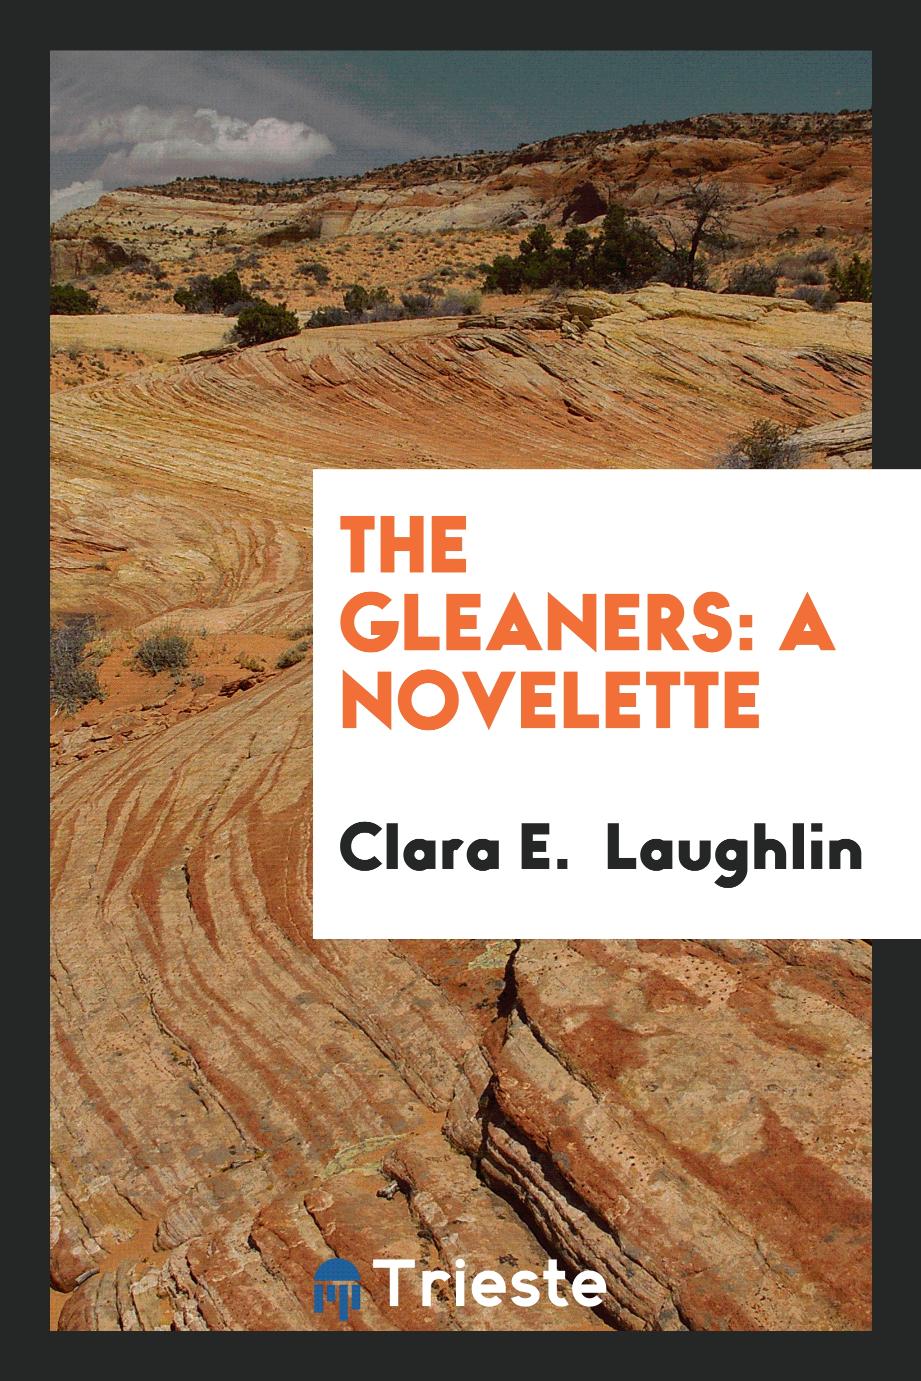 The Gleaners: A Novelette